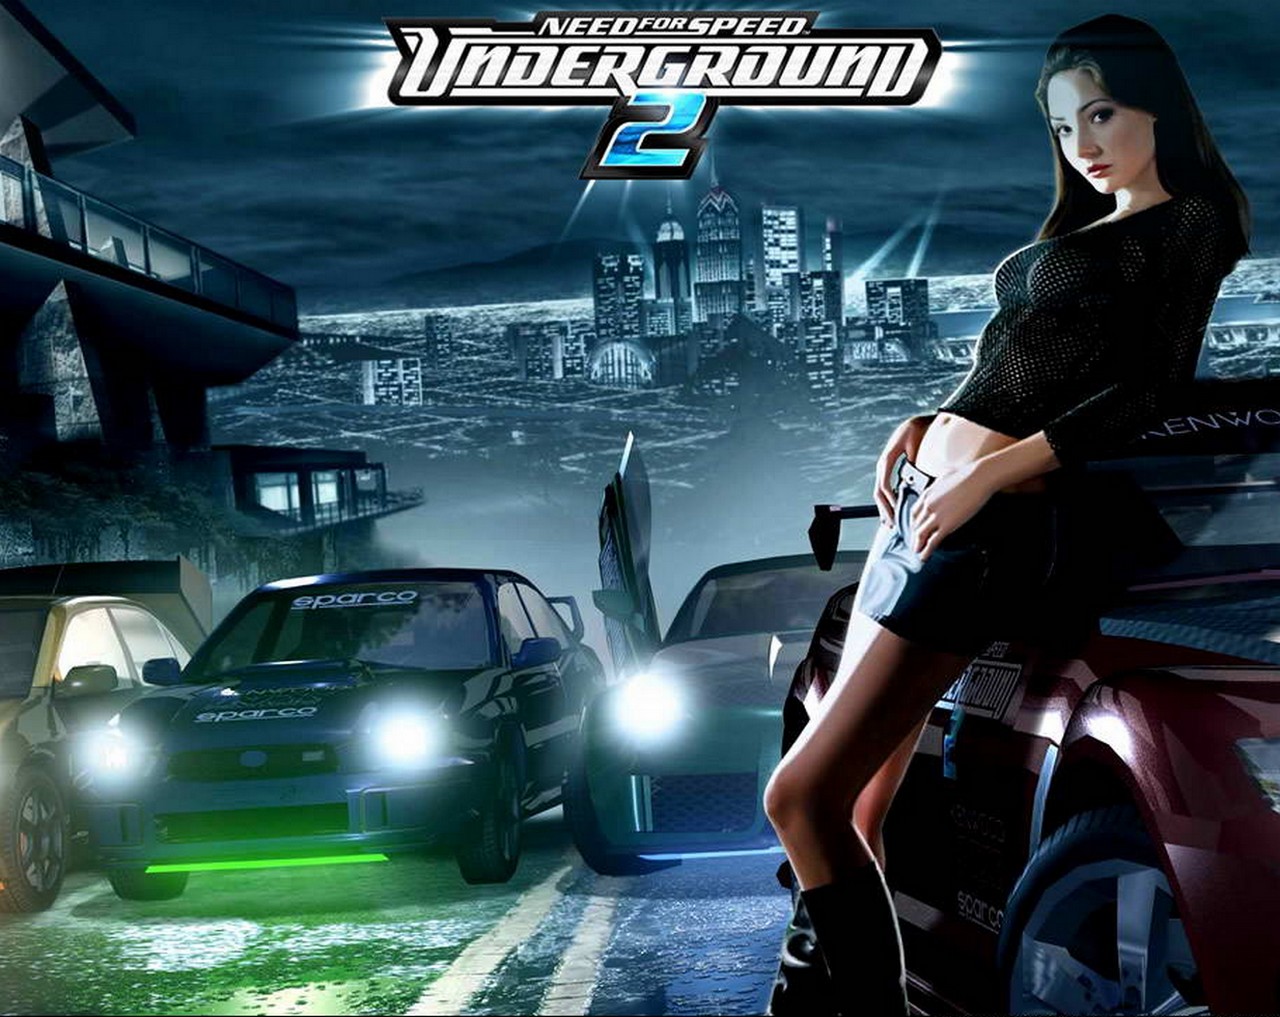 Суч 2. Need for Speed: Underground 2. Машина Рэйчел need for Speed Underground. Нфс мост андеграунд 2. Нид фор СПИД андеграунд 2 Рэйчел.